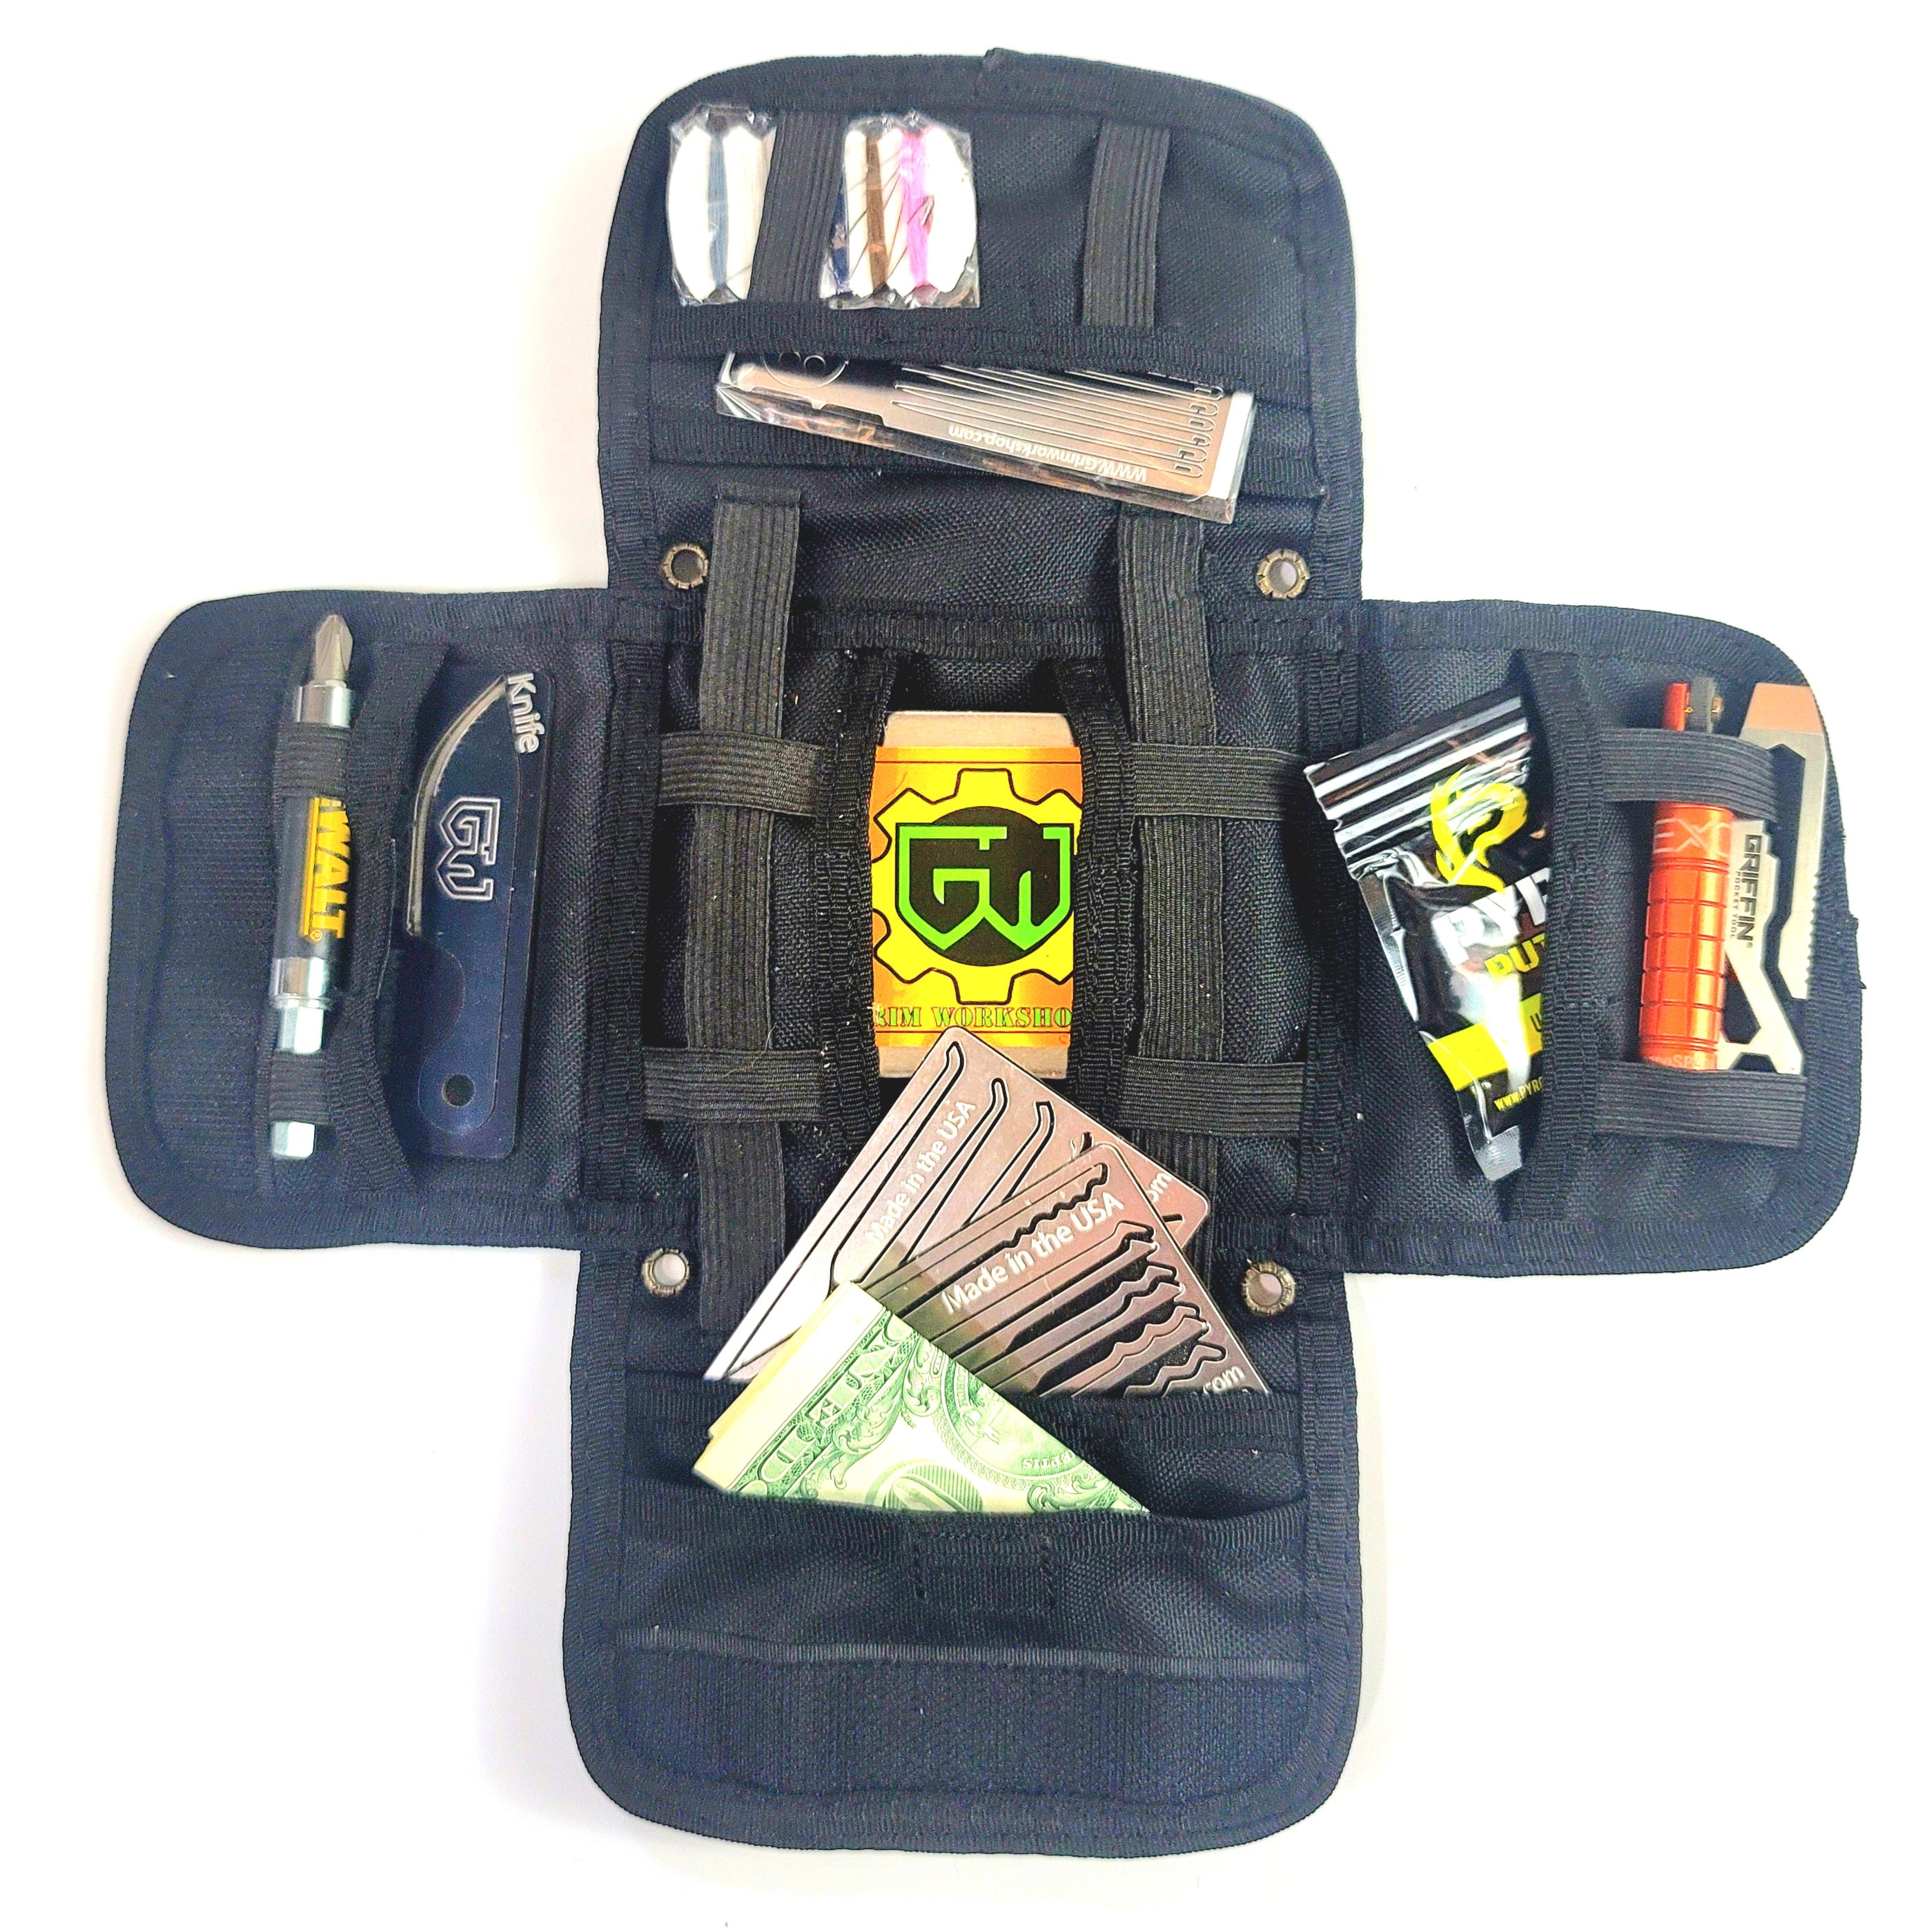 Anyone Use A Pocket Organizer?